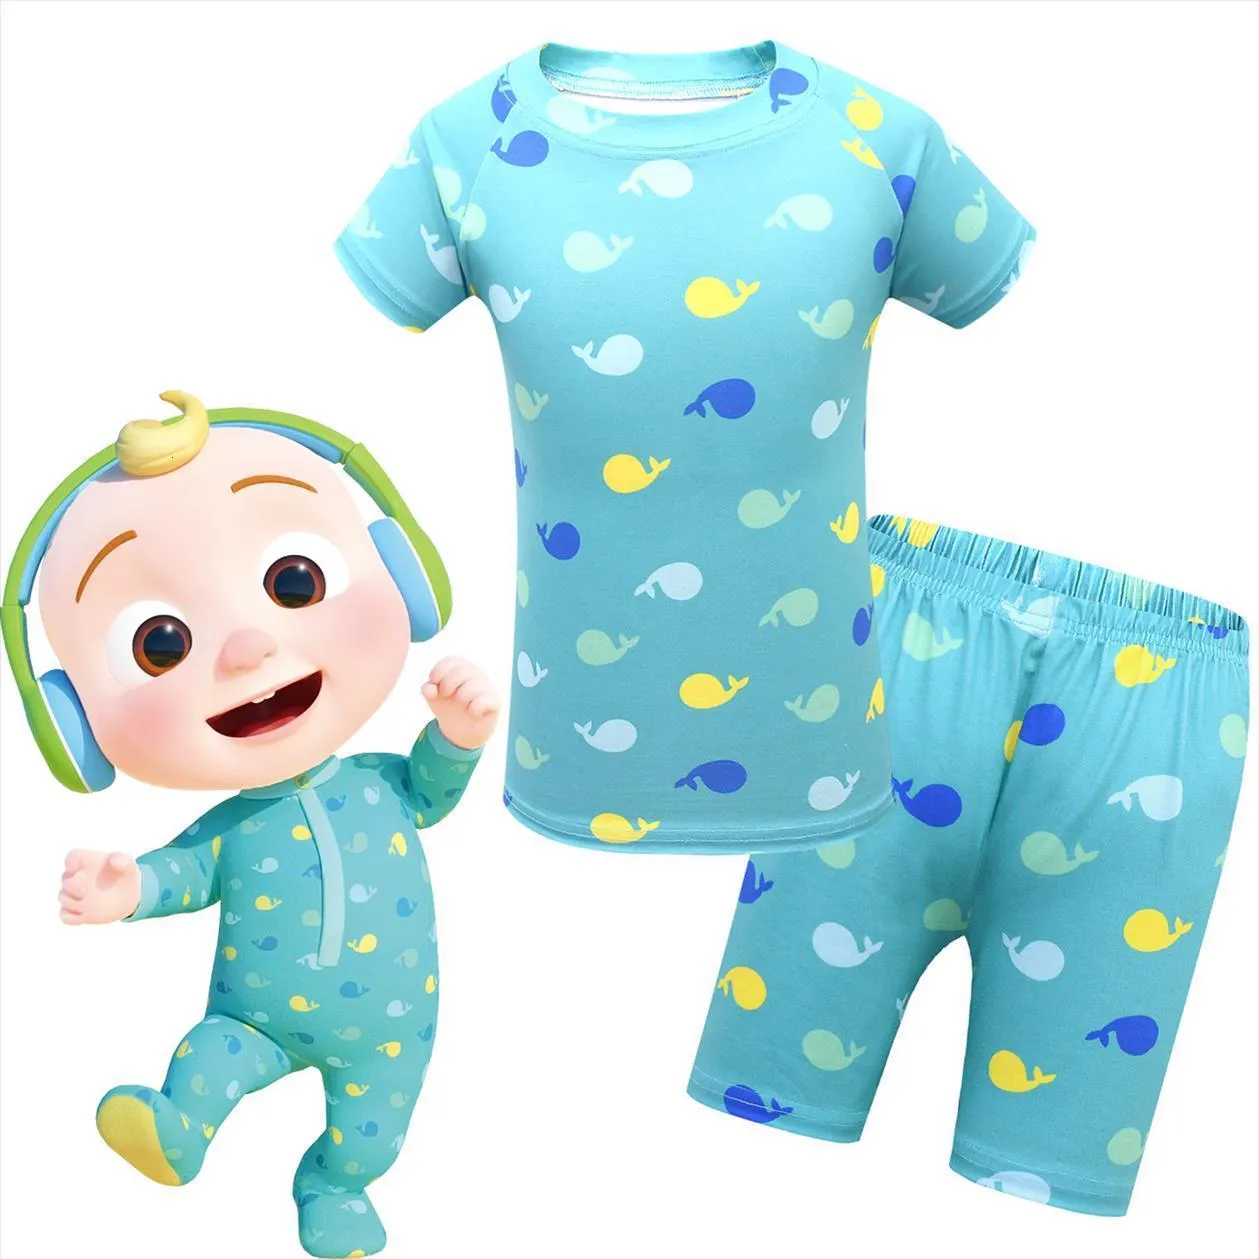 Cocomelon Boys Home Service Suit Underwear Cutecartoon Clothes Christmas  Pijamas Child Nightclothes Cotton Sleepwear From Victorys09, $40.64